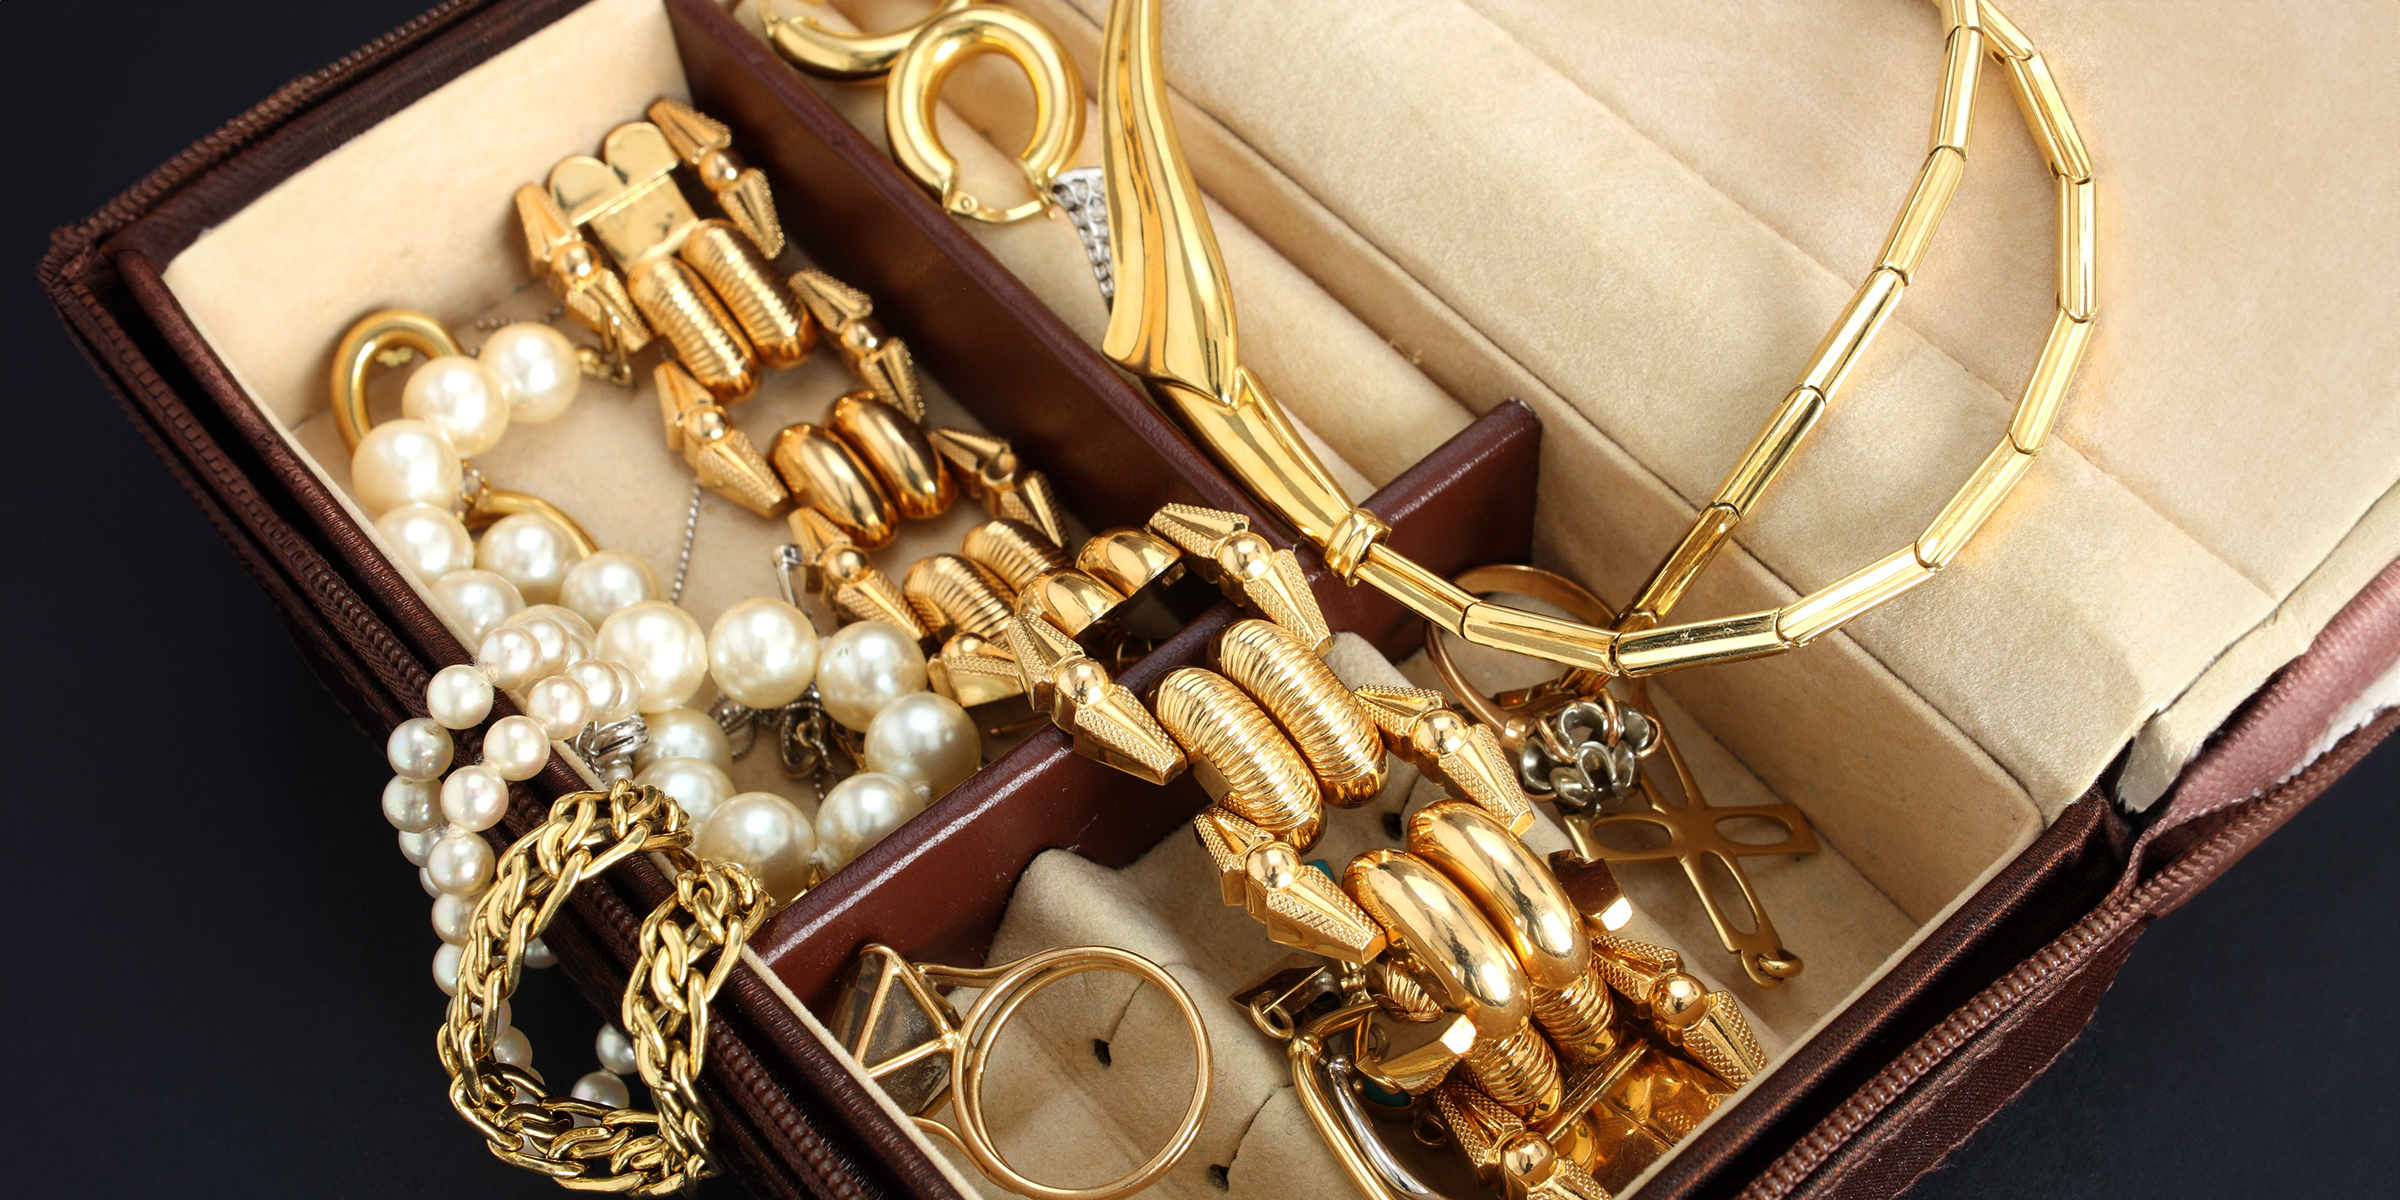 Jewelry items inside a box | Source: Shutterstock